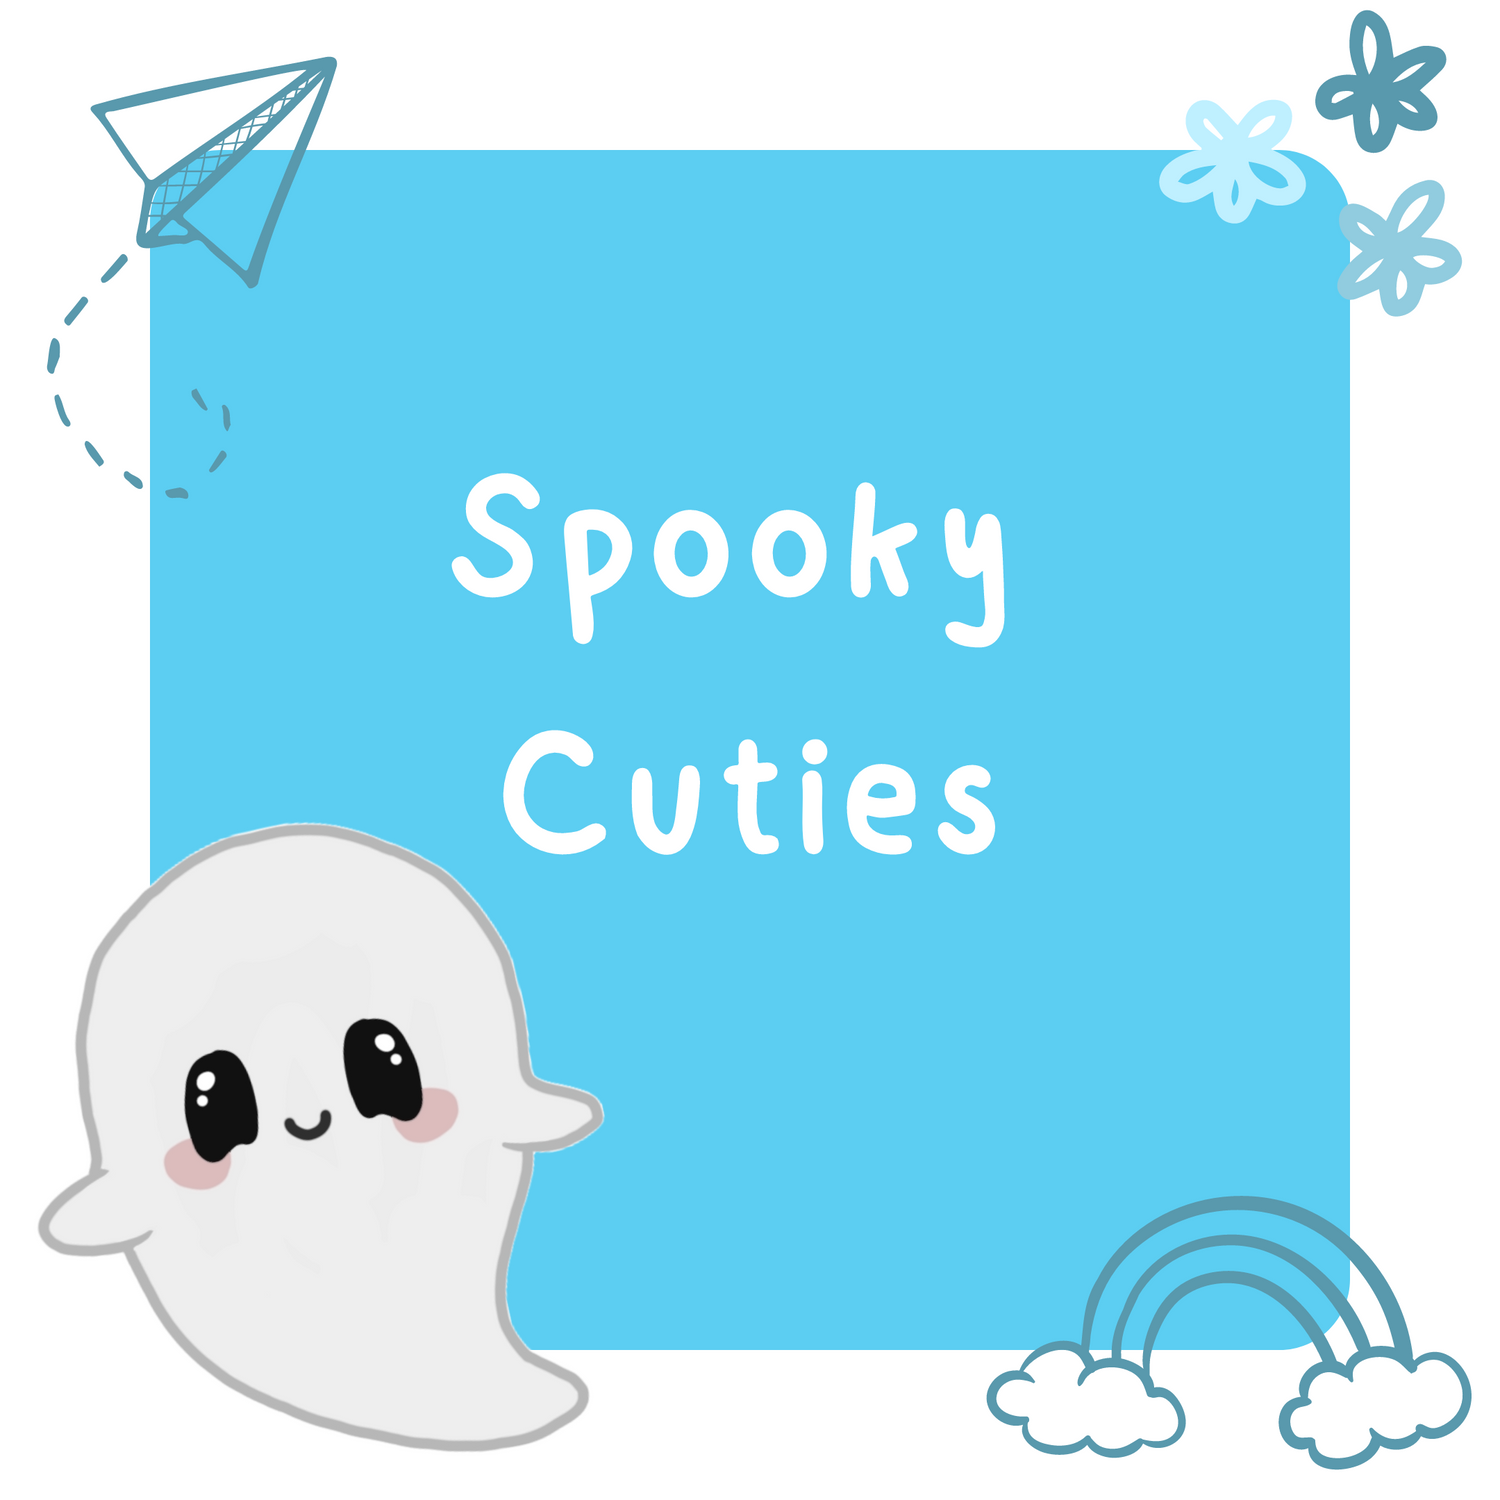 Spooky Cuties